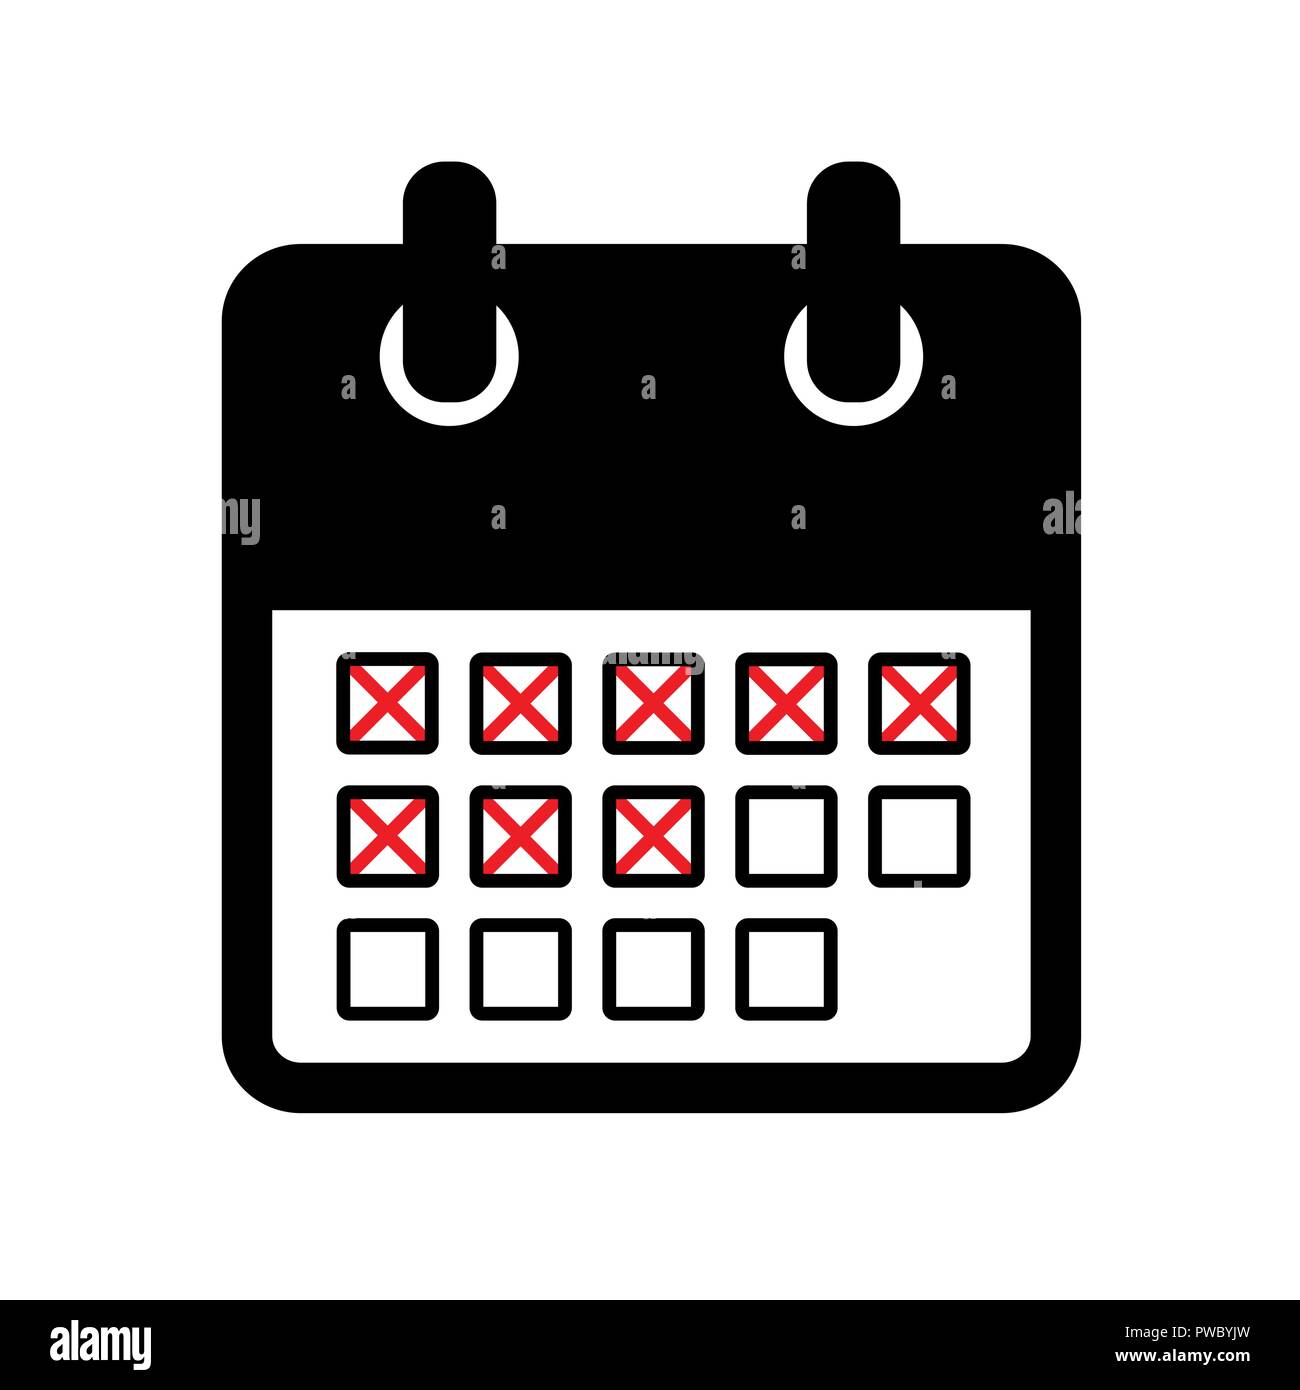 Tage zählen in das Symbol Kalender Piktogramm Vektor-illustration EPS 10  Stock-Vektorgrafik - Alamy